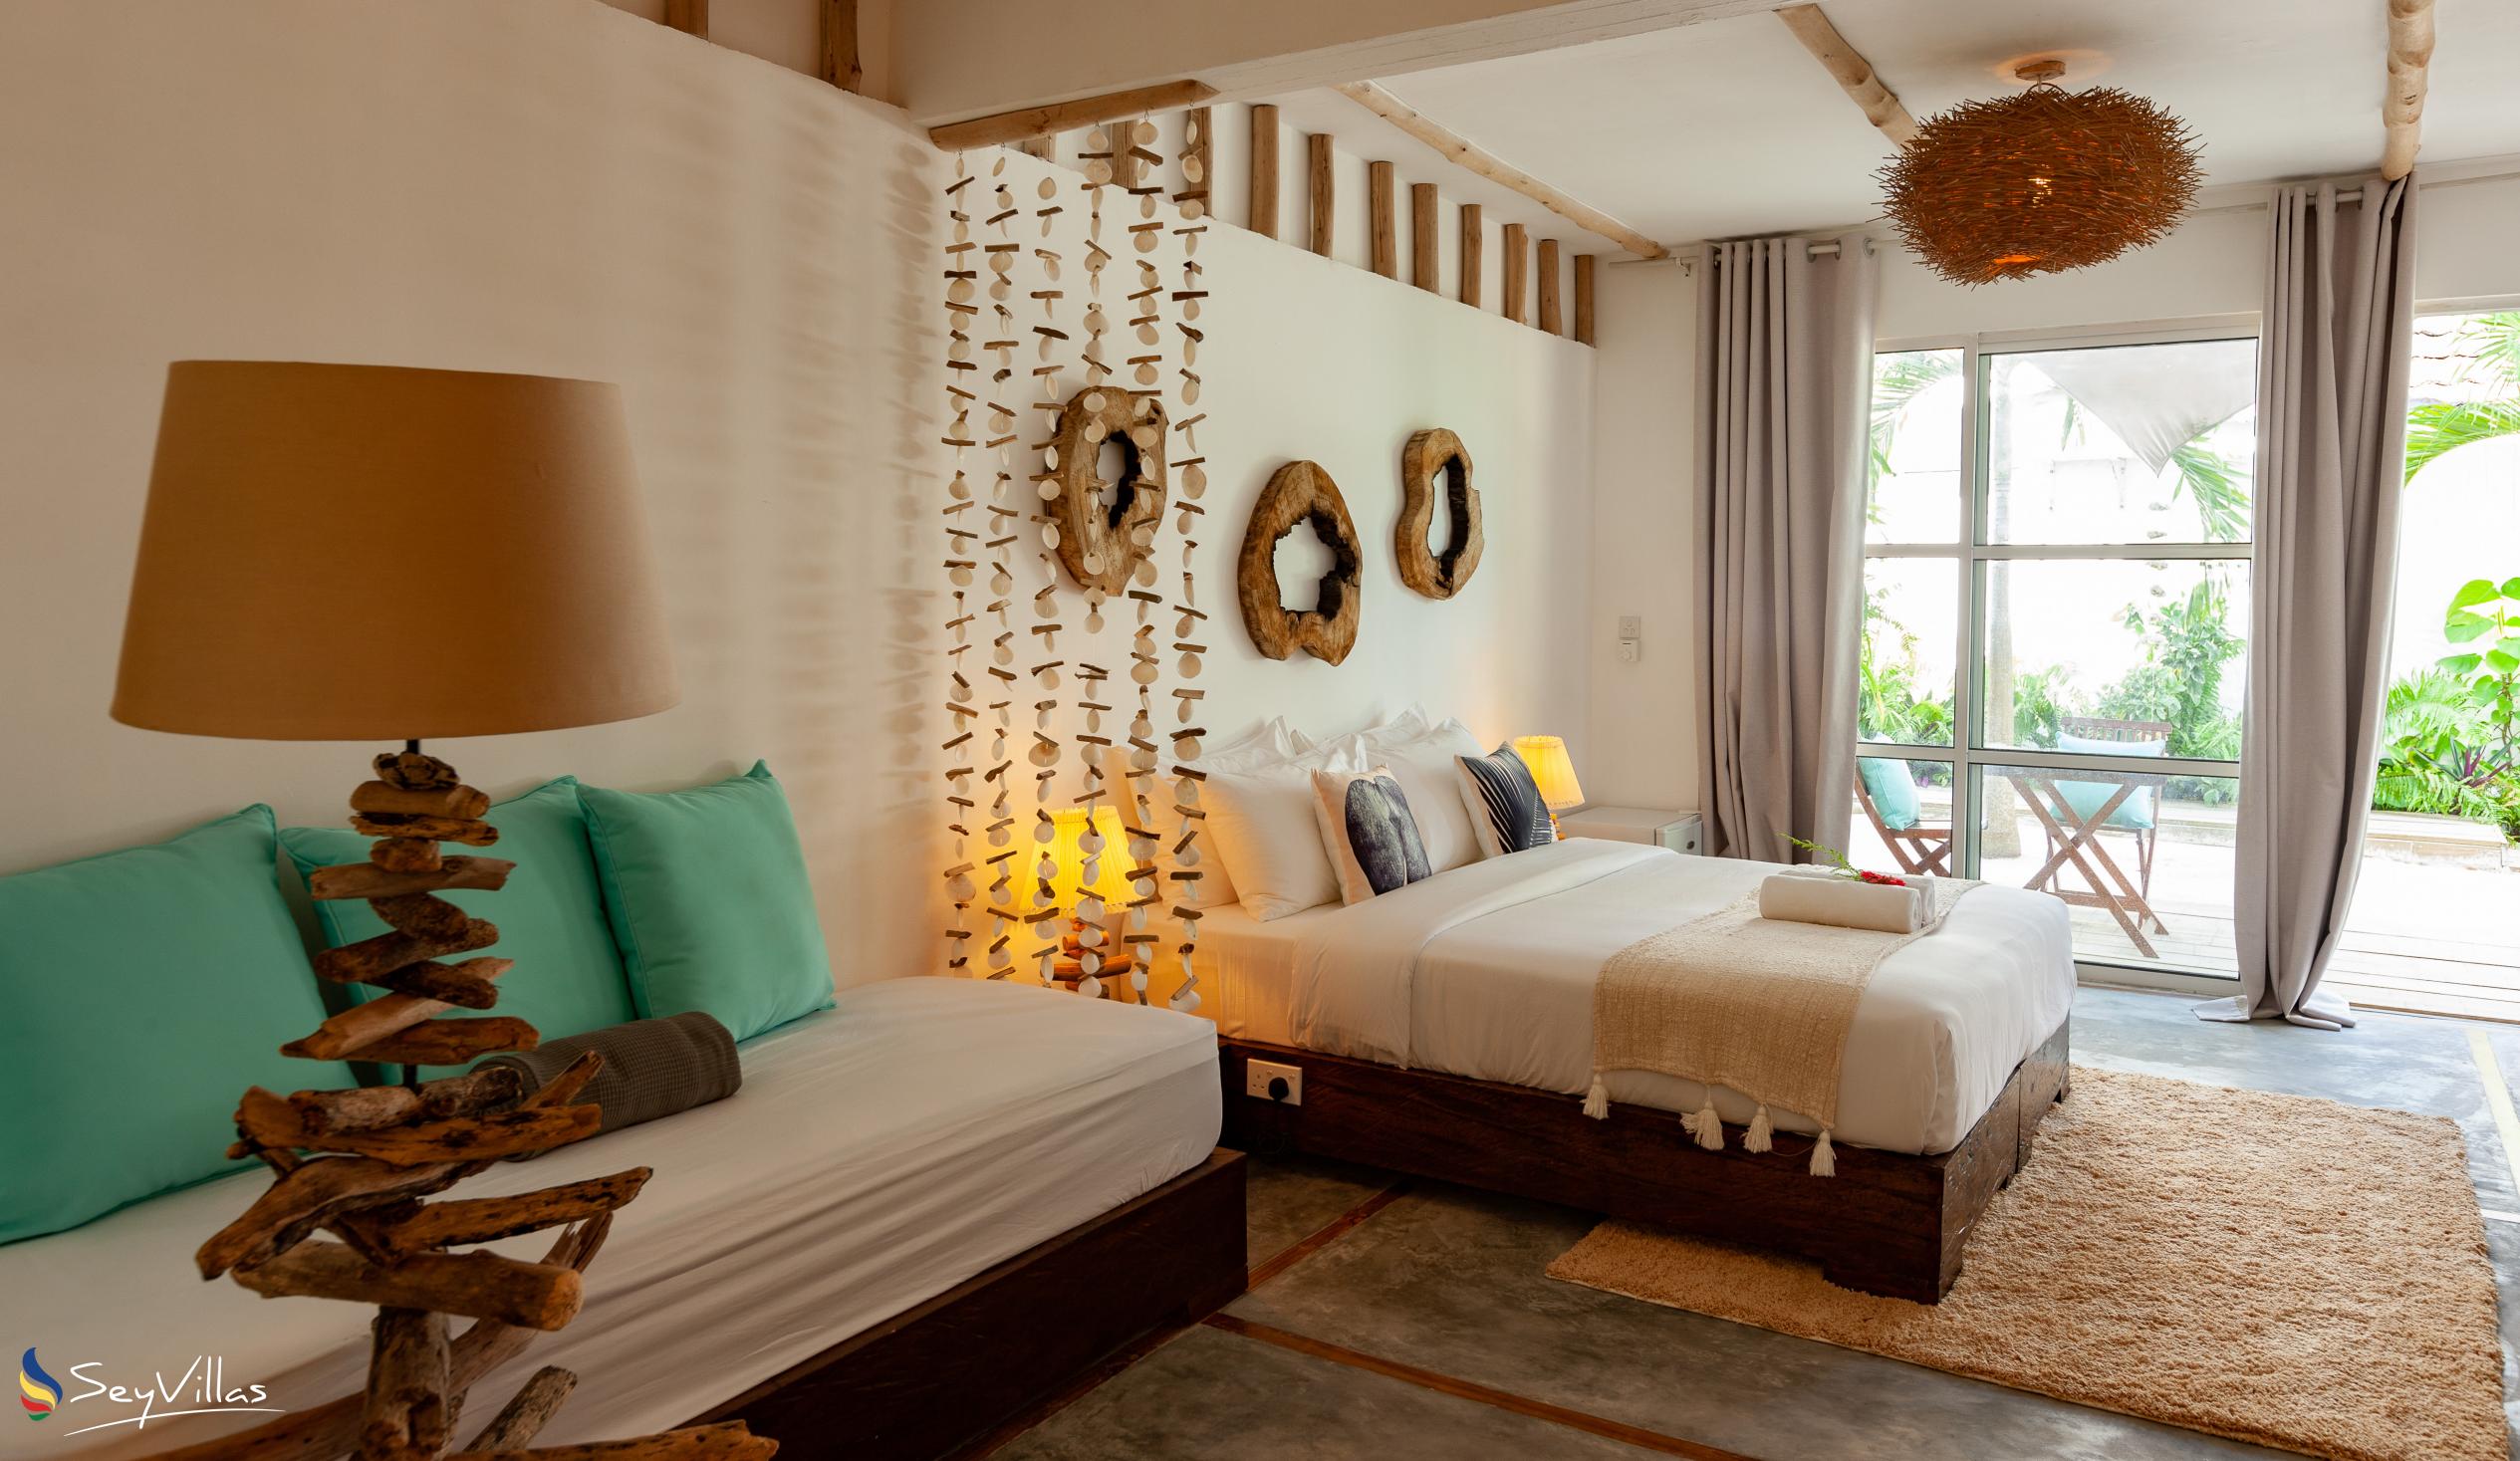 Photo 88: Bliss Hotel Praslin - Beach House - Beach Garden Room - Praslin (Seychelles)